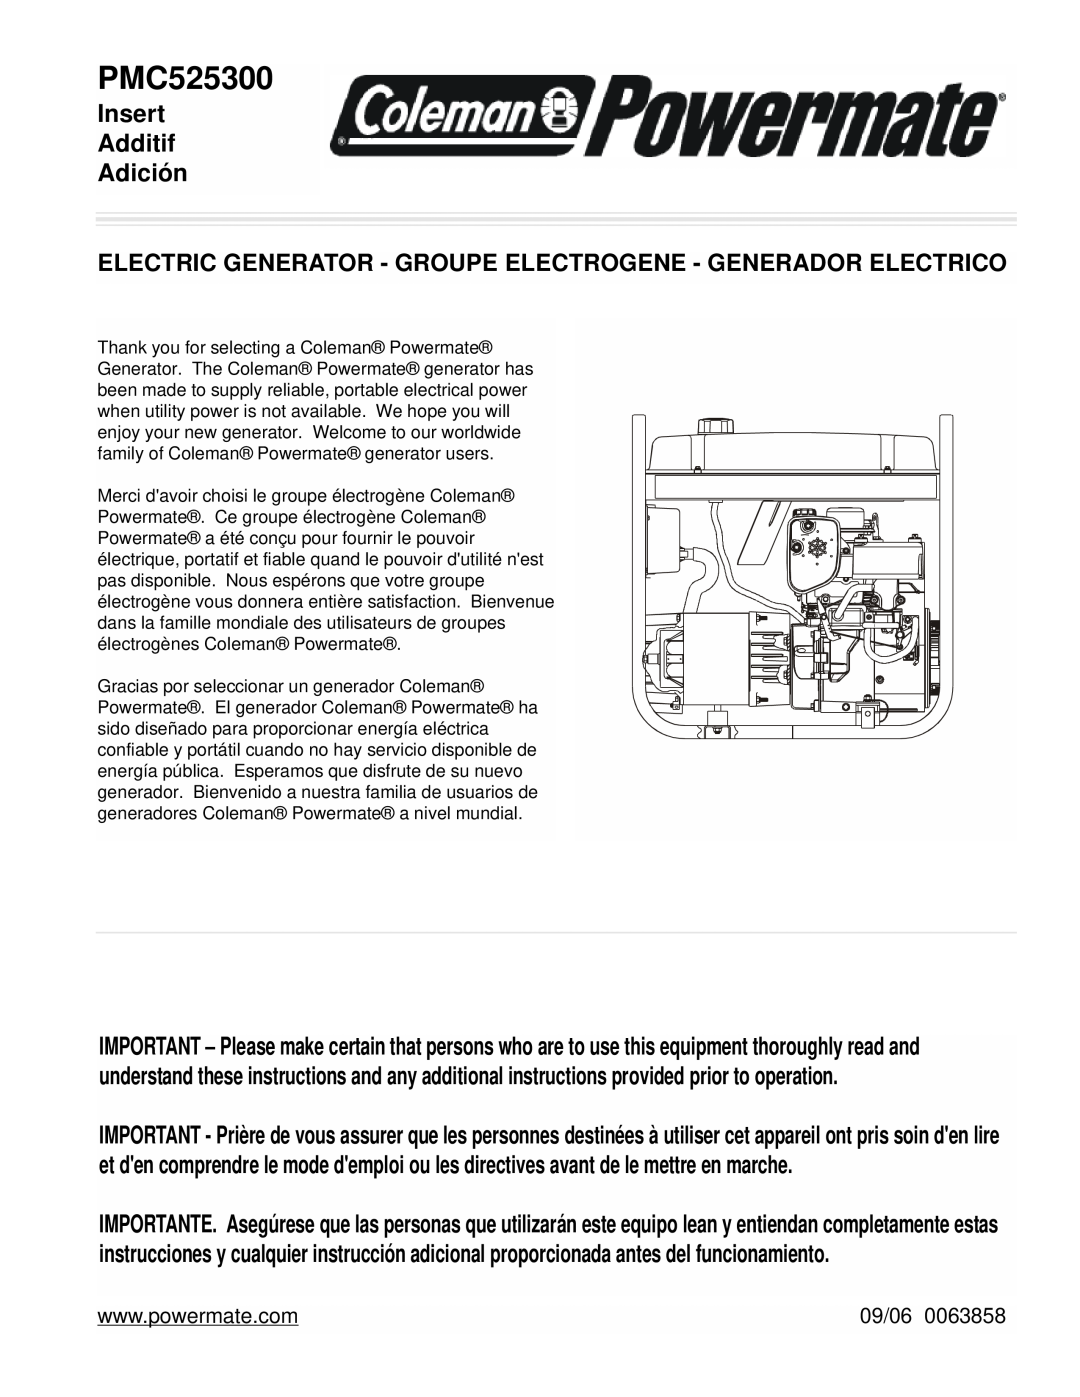 Powermate PMC525300 manual Insert Additif Adición, Electric Generator - Groupe Electrogene - Generador Electrico, 09/06 